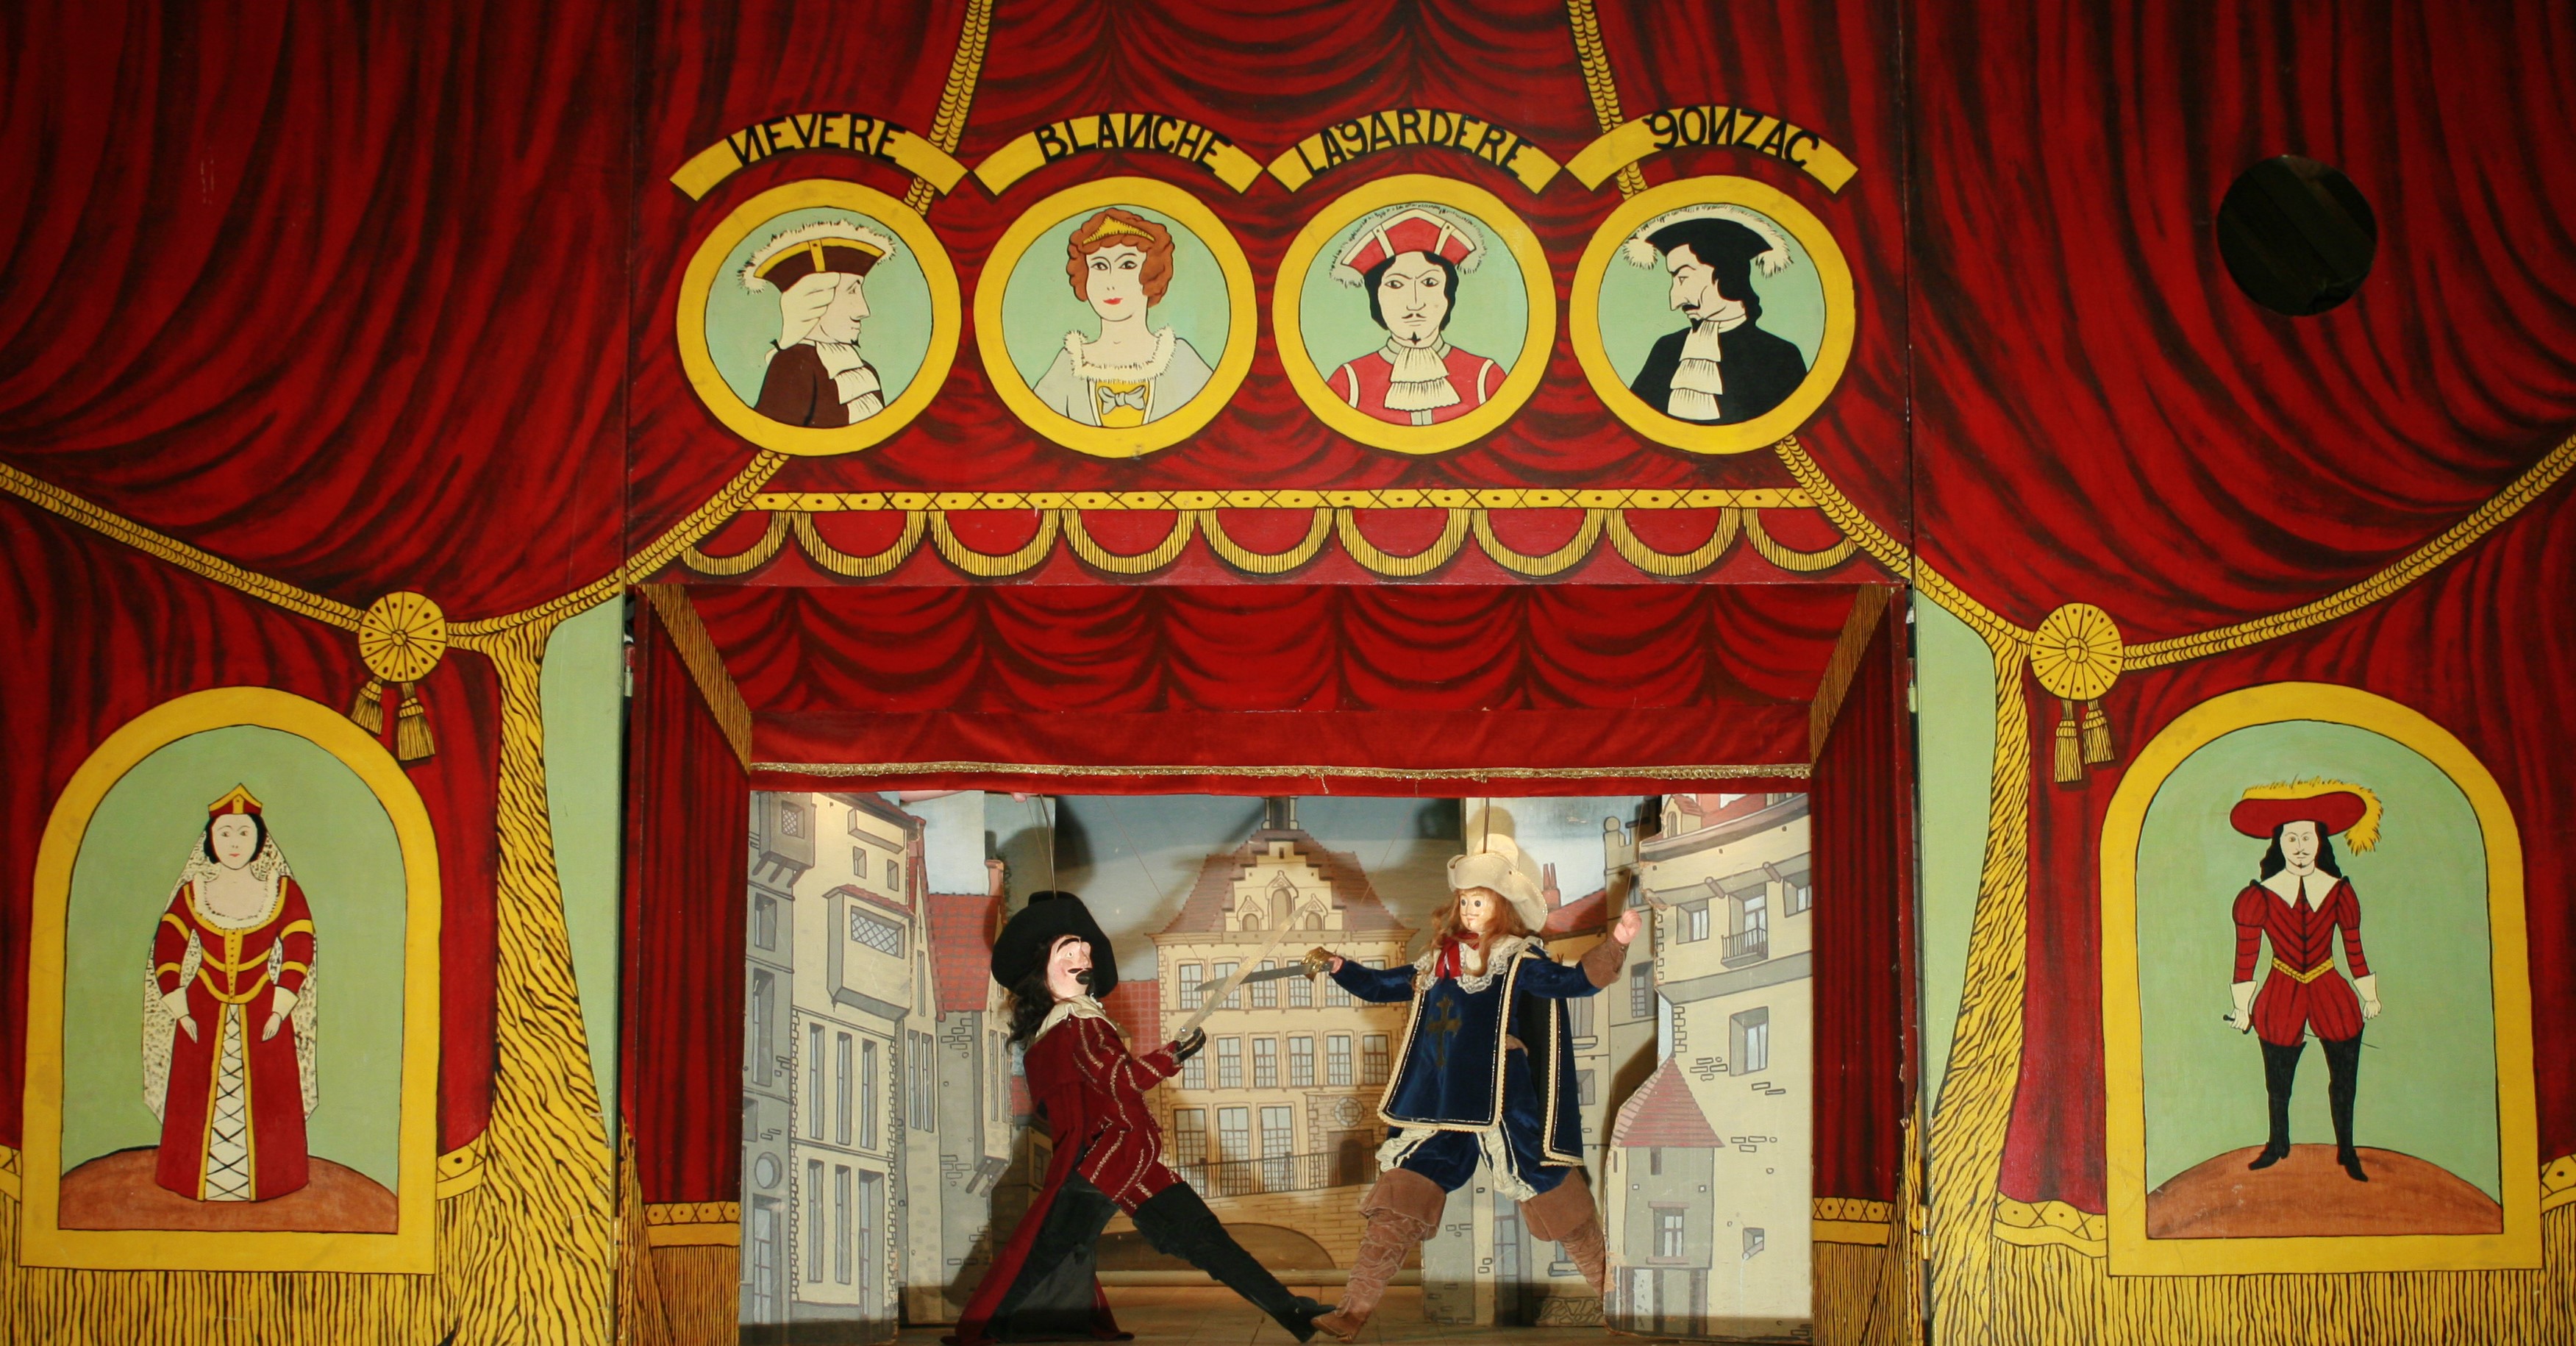 Troone puppet theatre